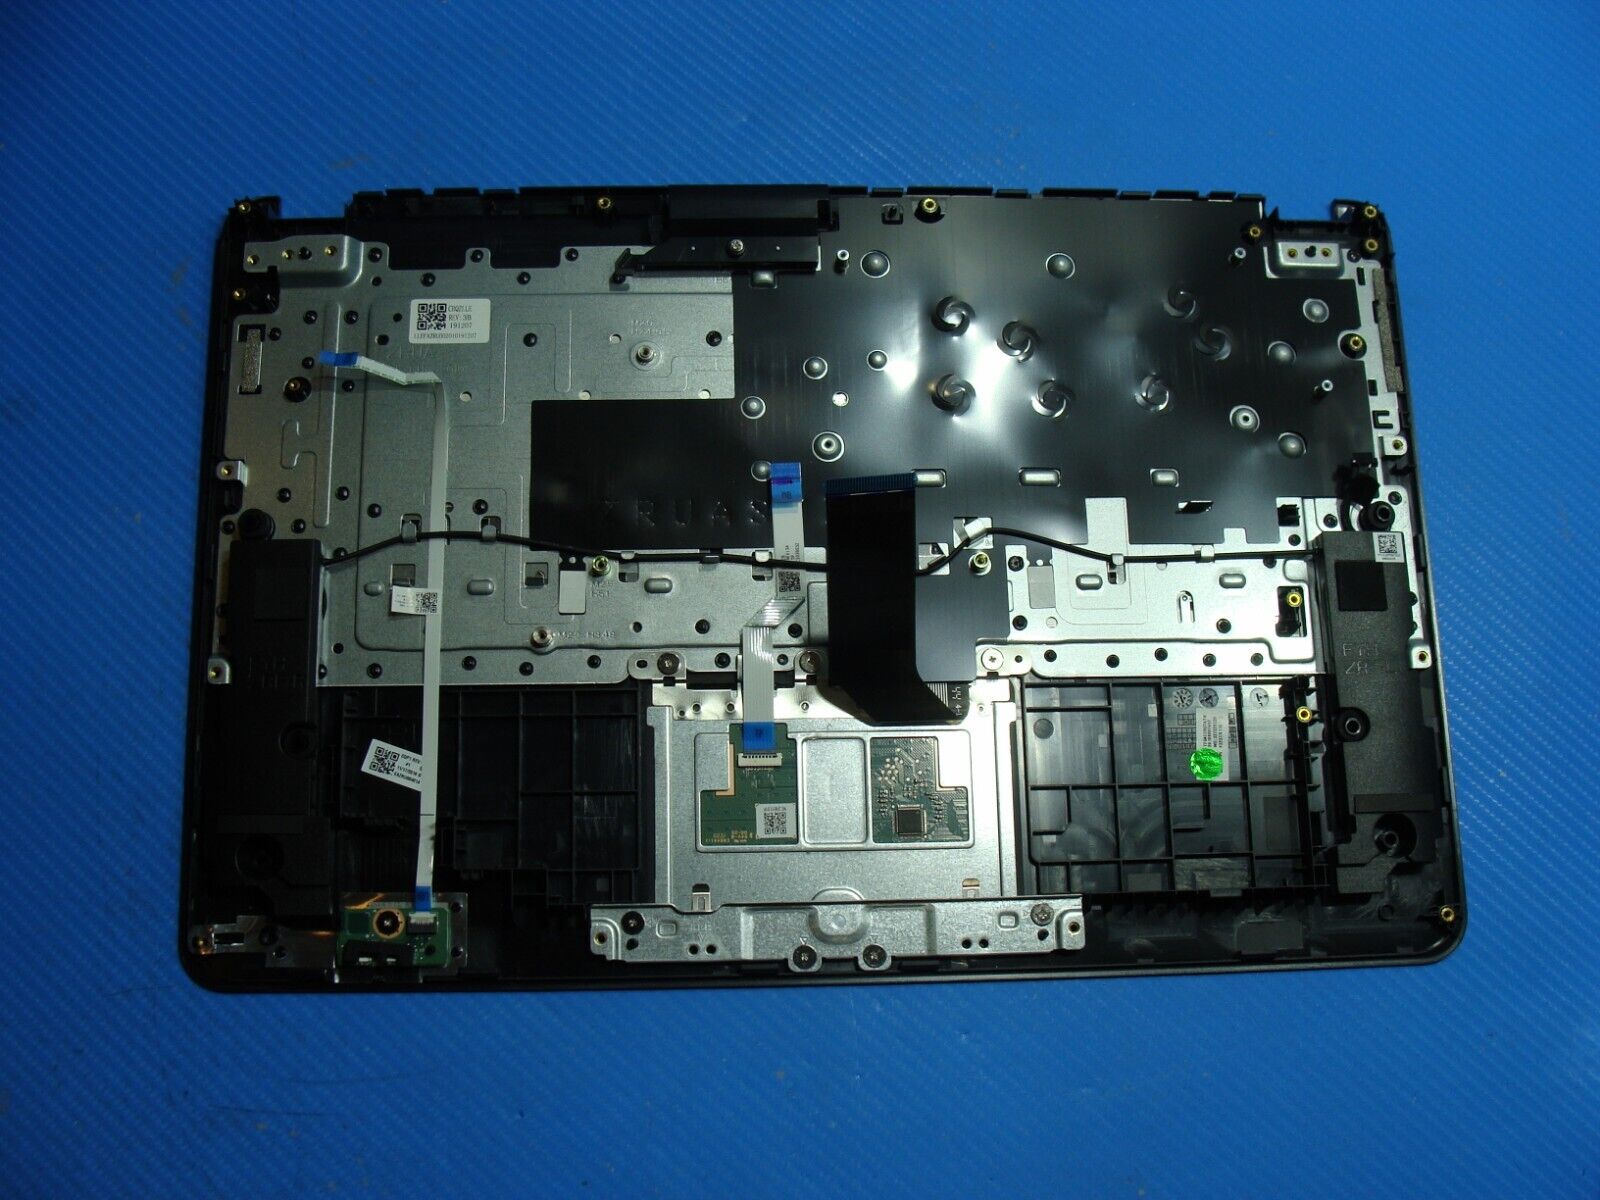 Acer Chromebook CB3-532-C3F7 15.6